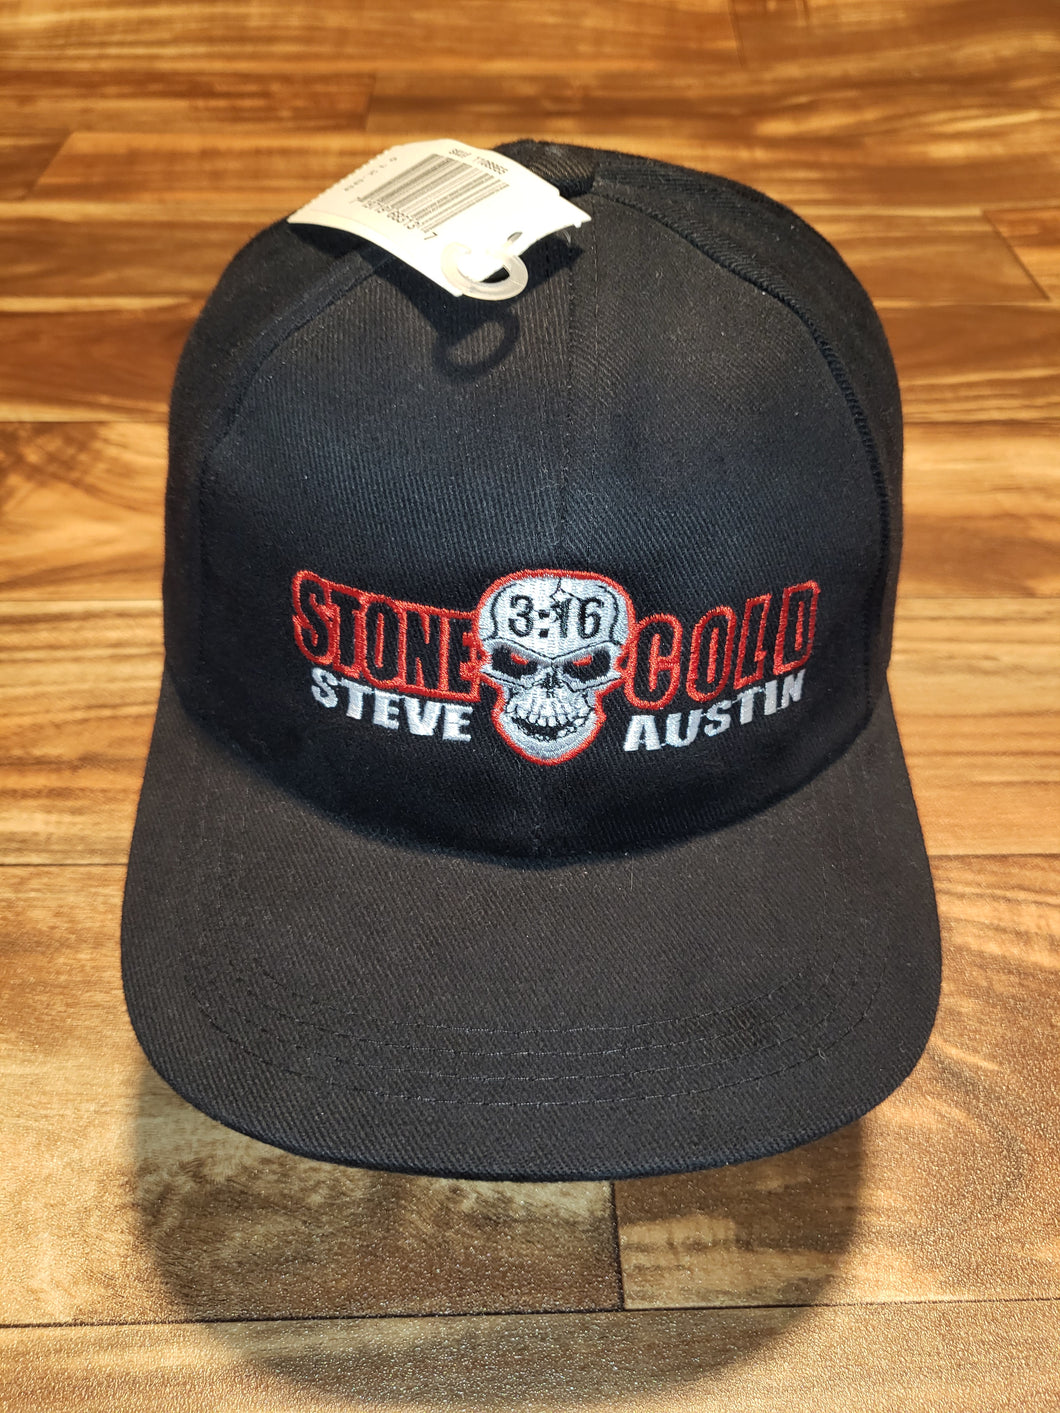 NEW Vintage Rare Stone Cold Steve Austin WWF Hat